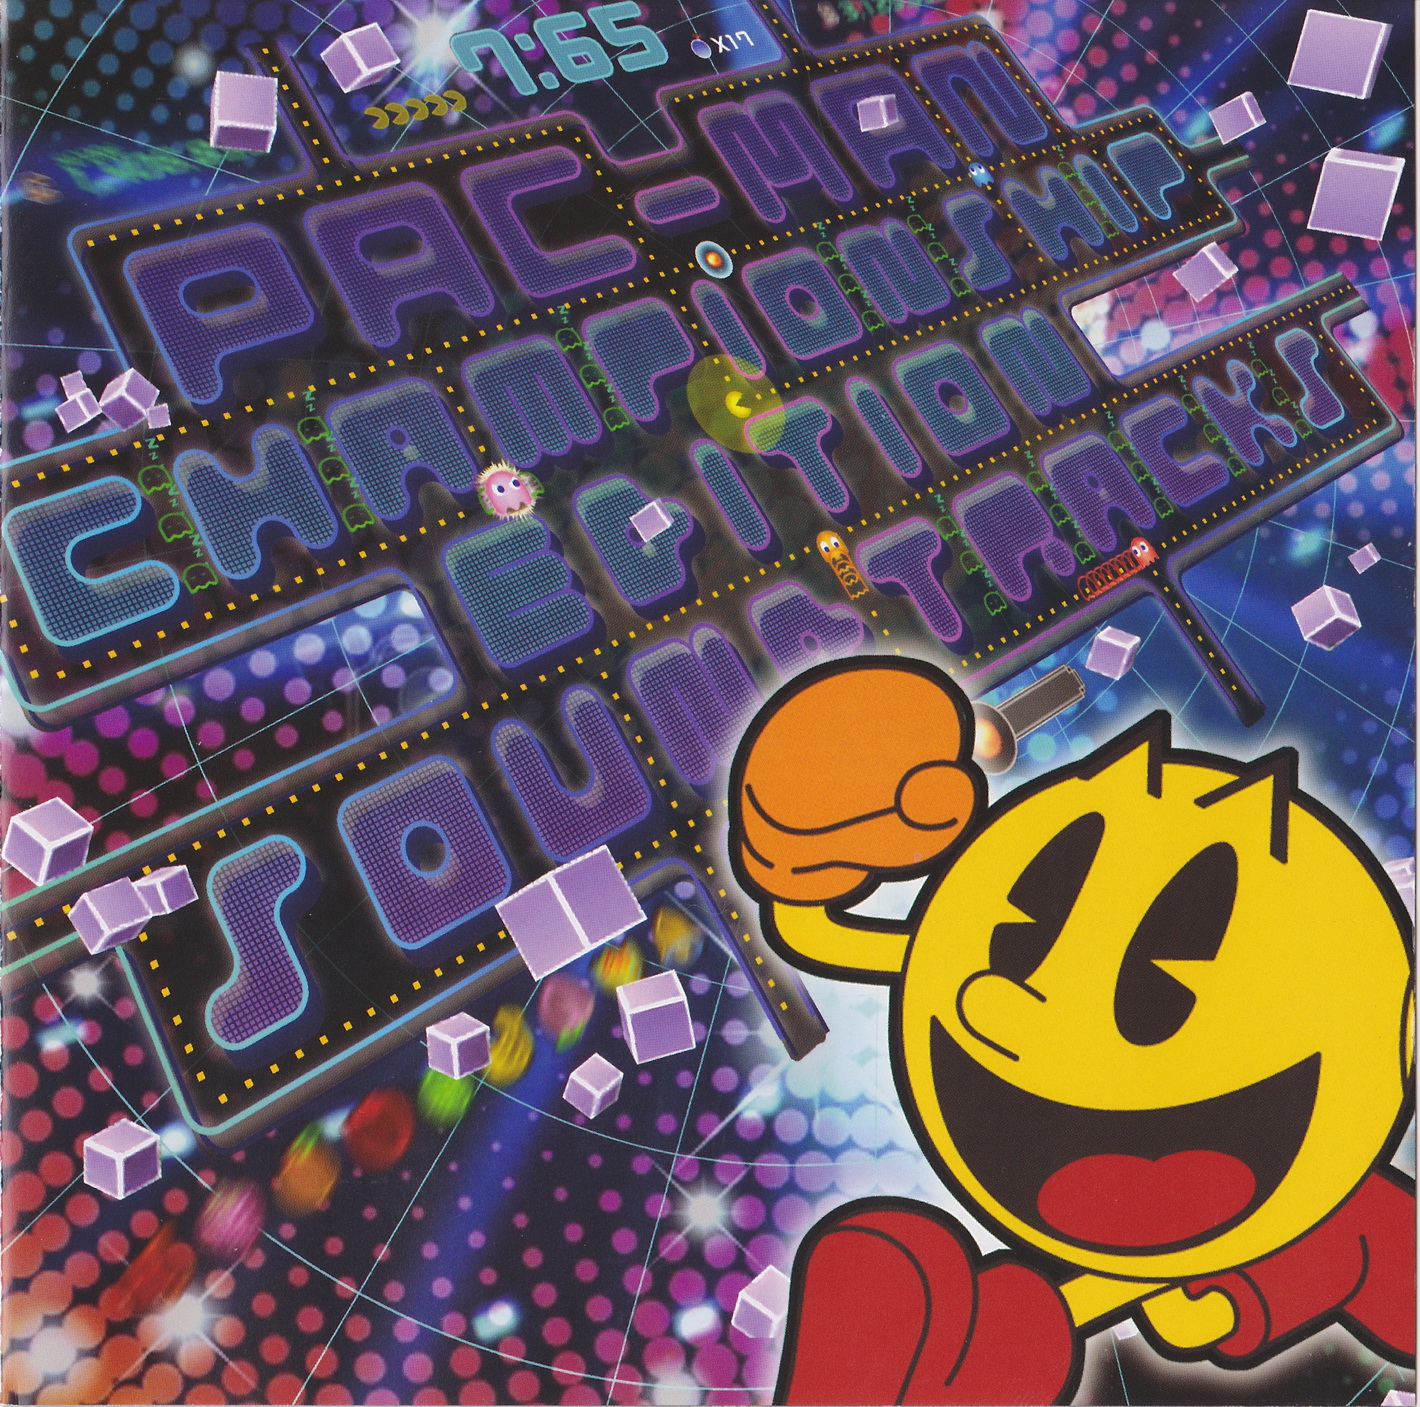 Pac man championship. Pac-man Championship Edition. Pacman Championship Edition. Pacman Music. Пакман красивая картинка.